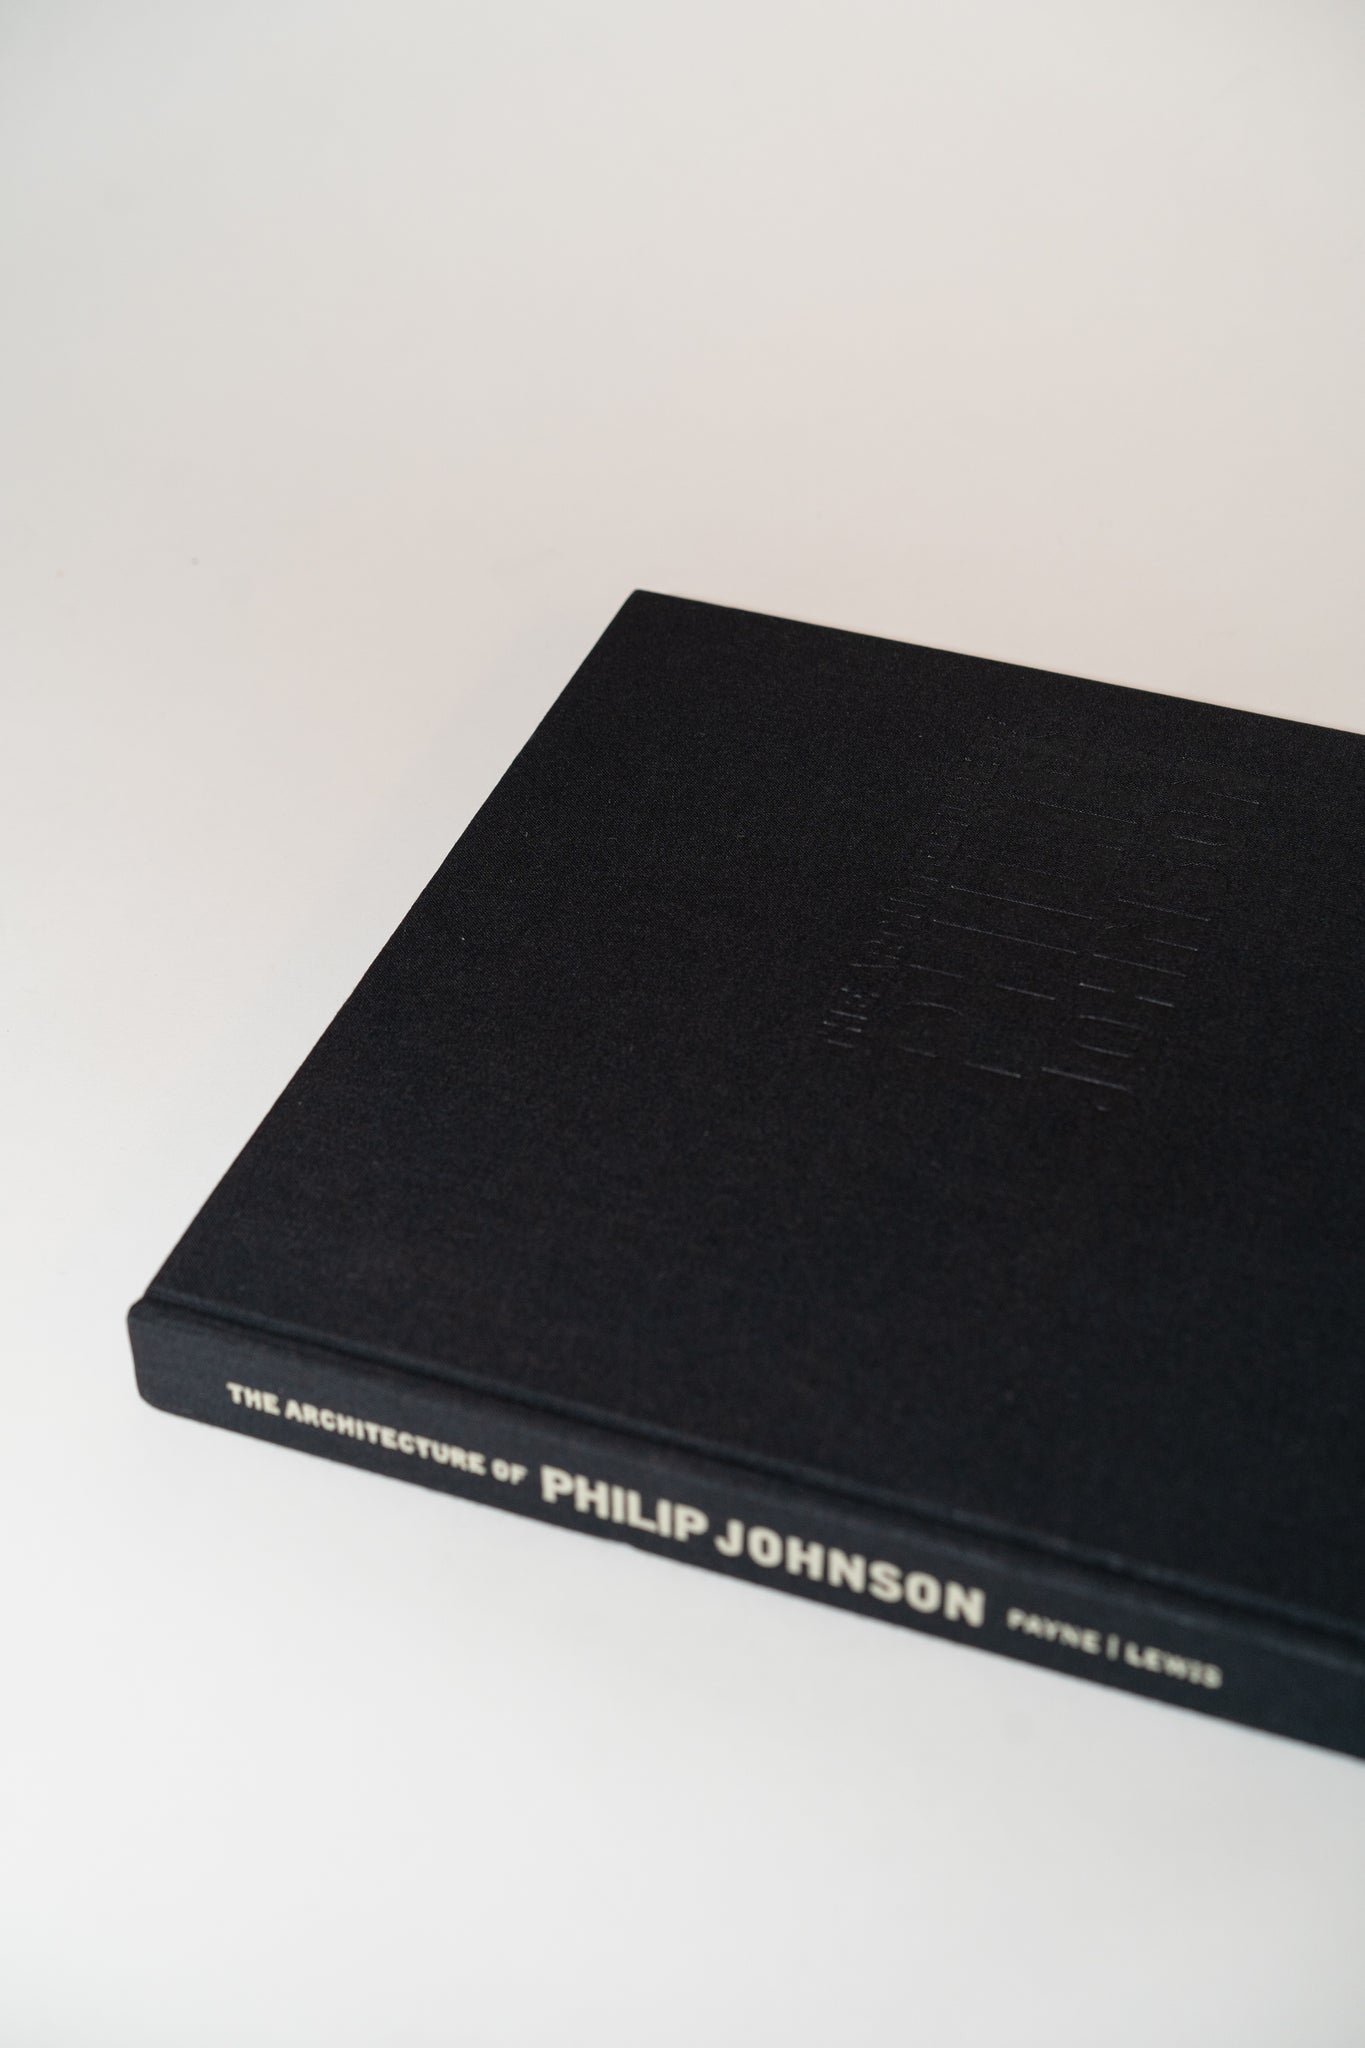 The Architecture of Philip Johnson (2002)